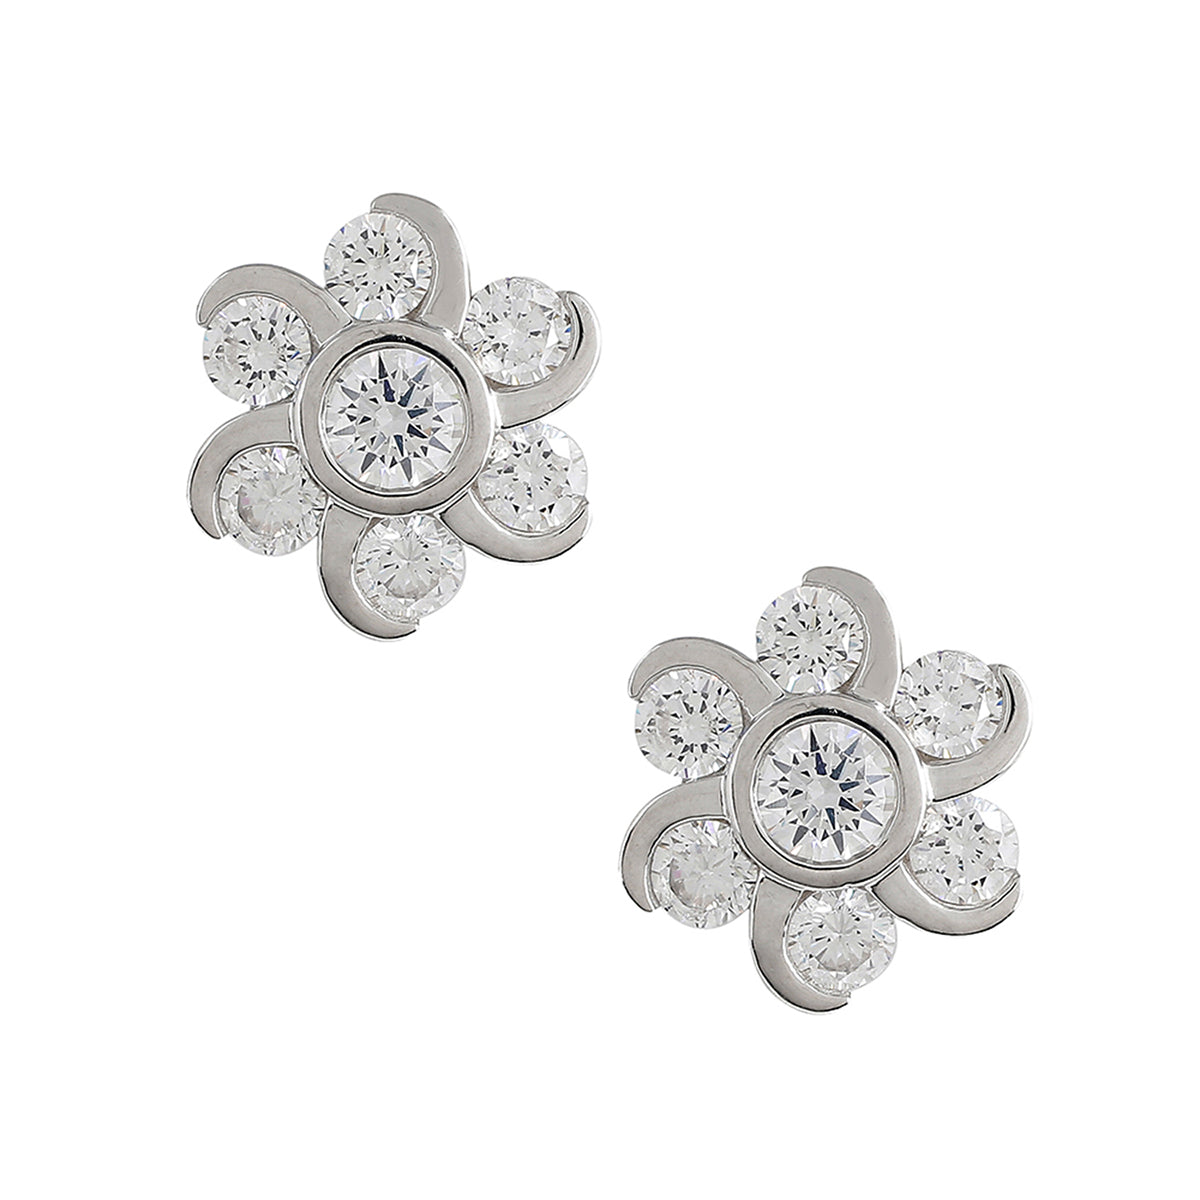 925 Sterling Silver CZ Floral Stud Earrings